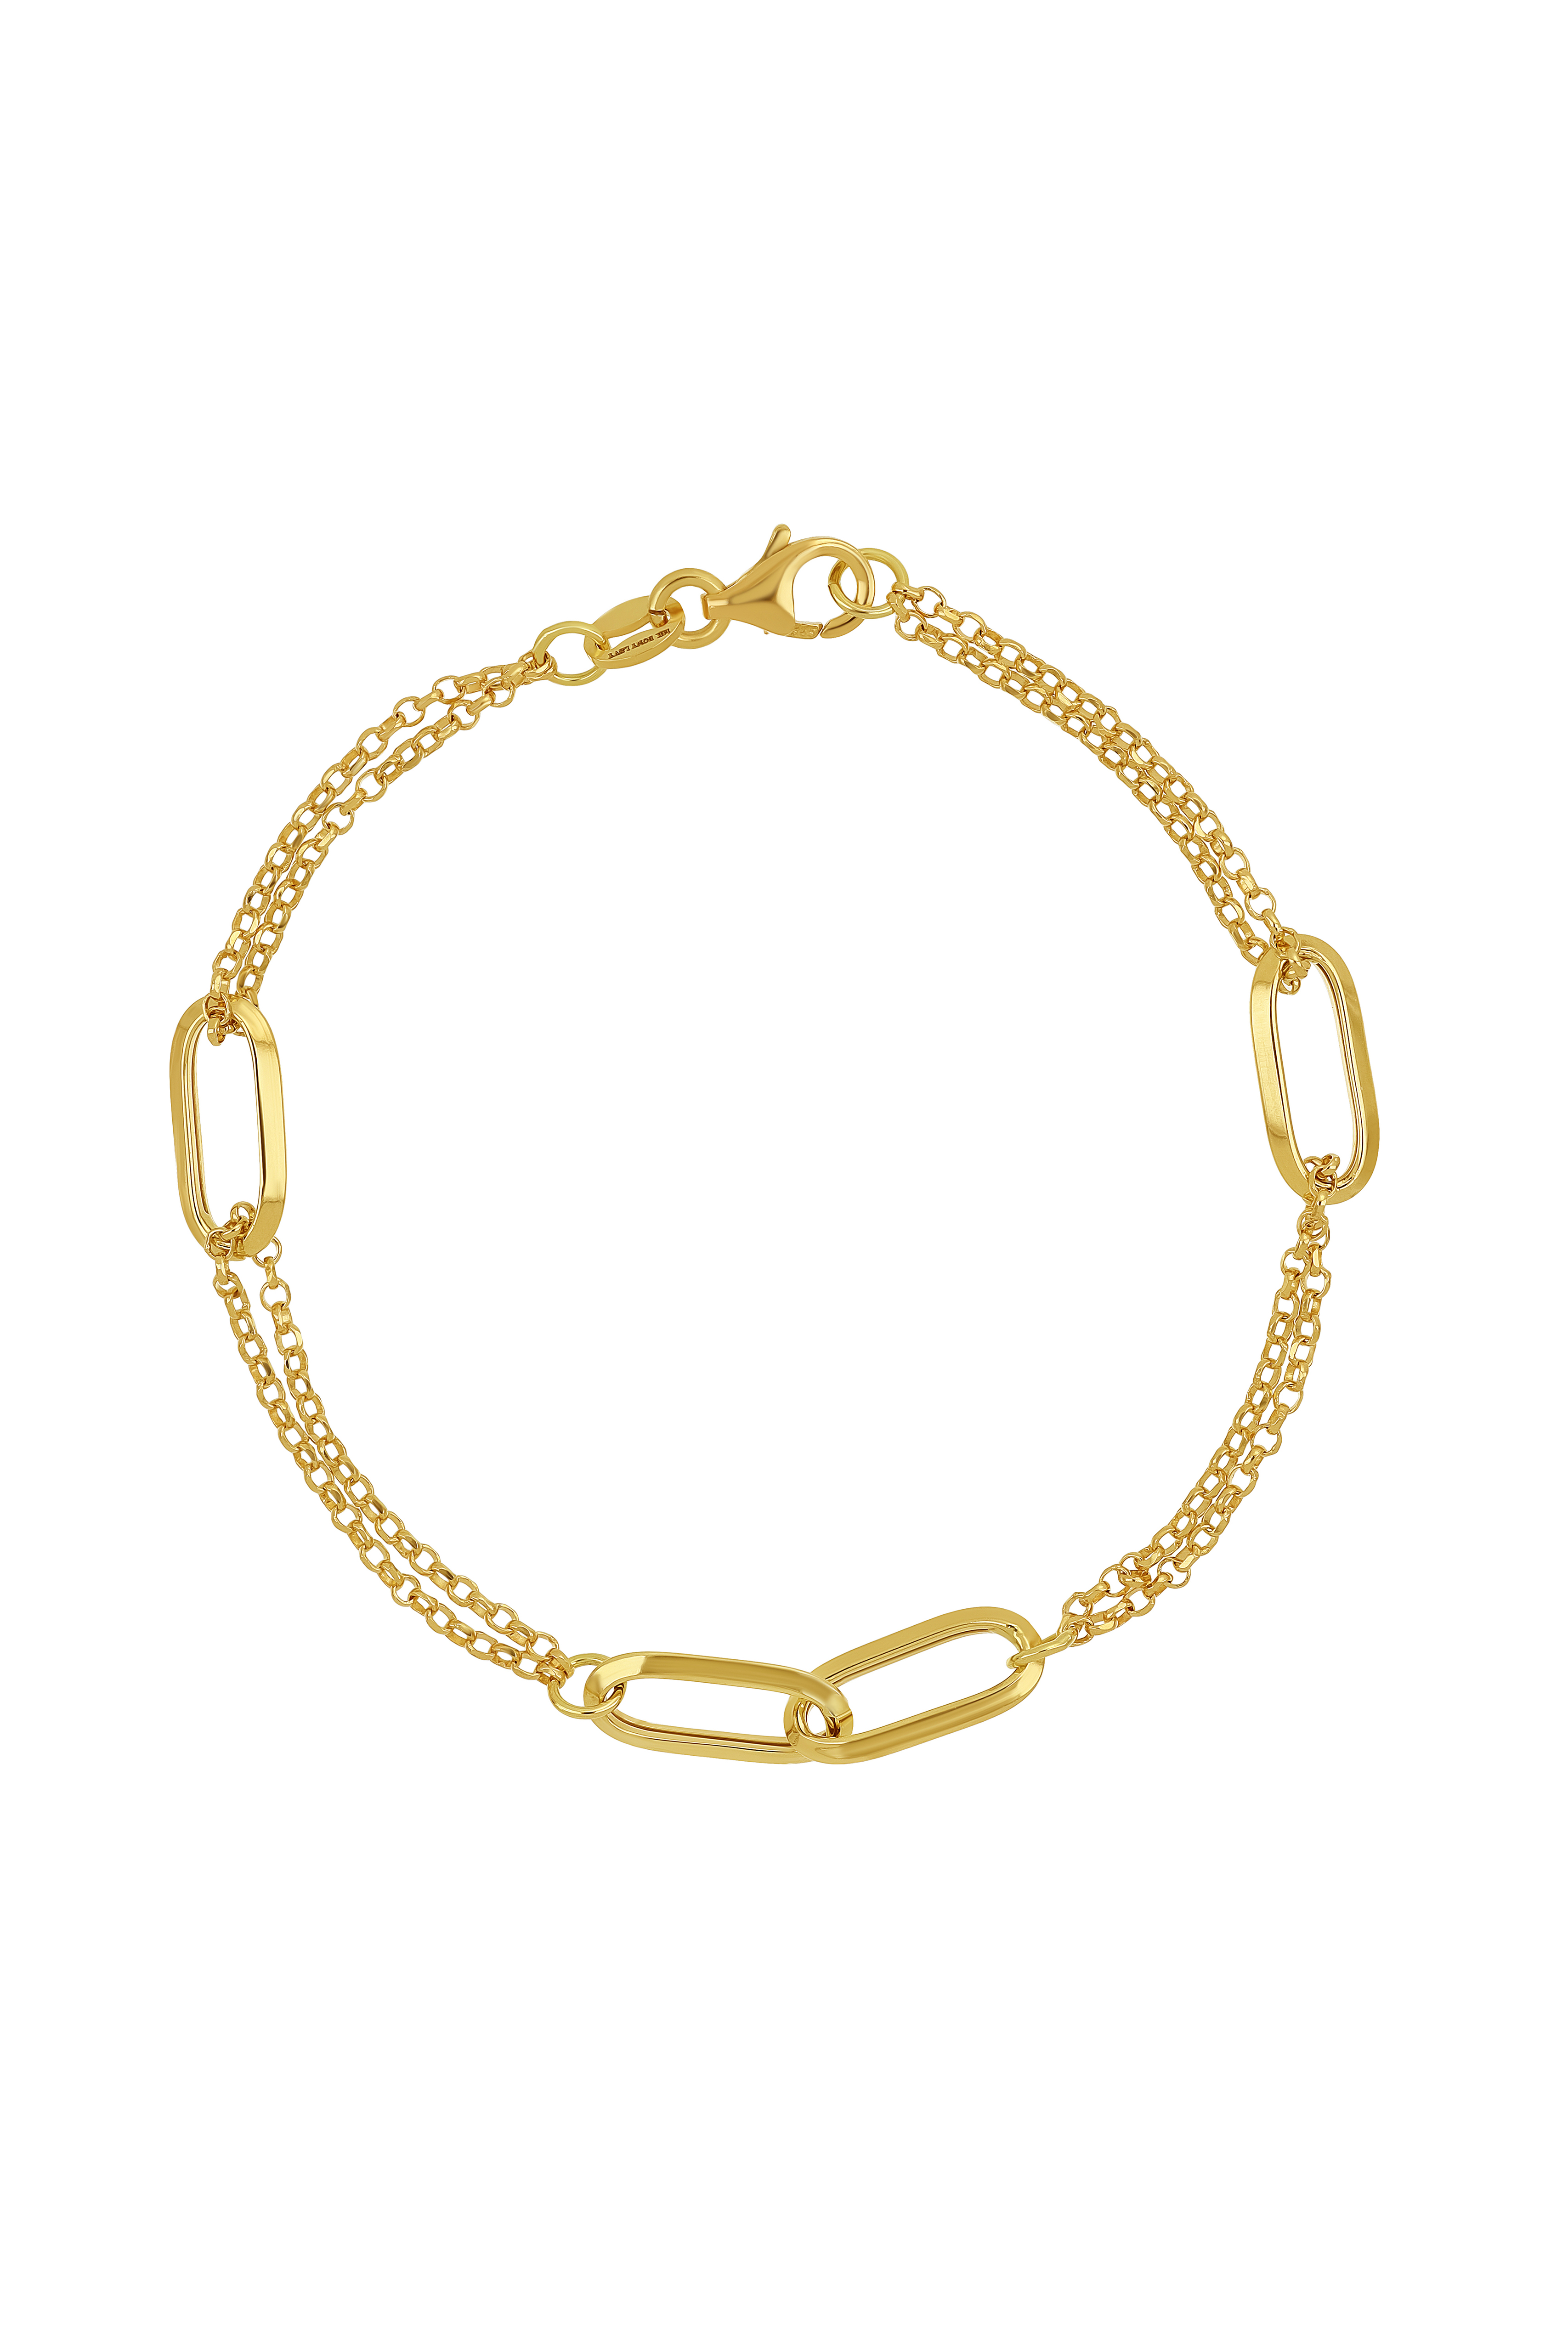 Bony Levy Ofira 14K Gold Chain Link Necklace